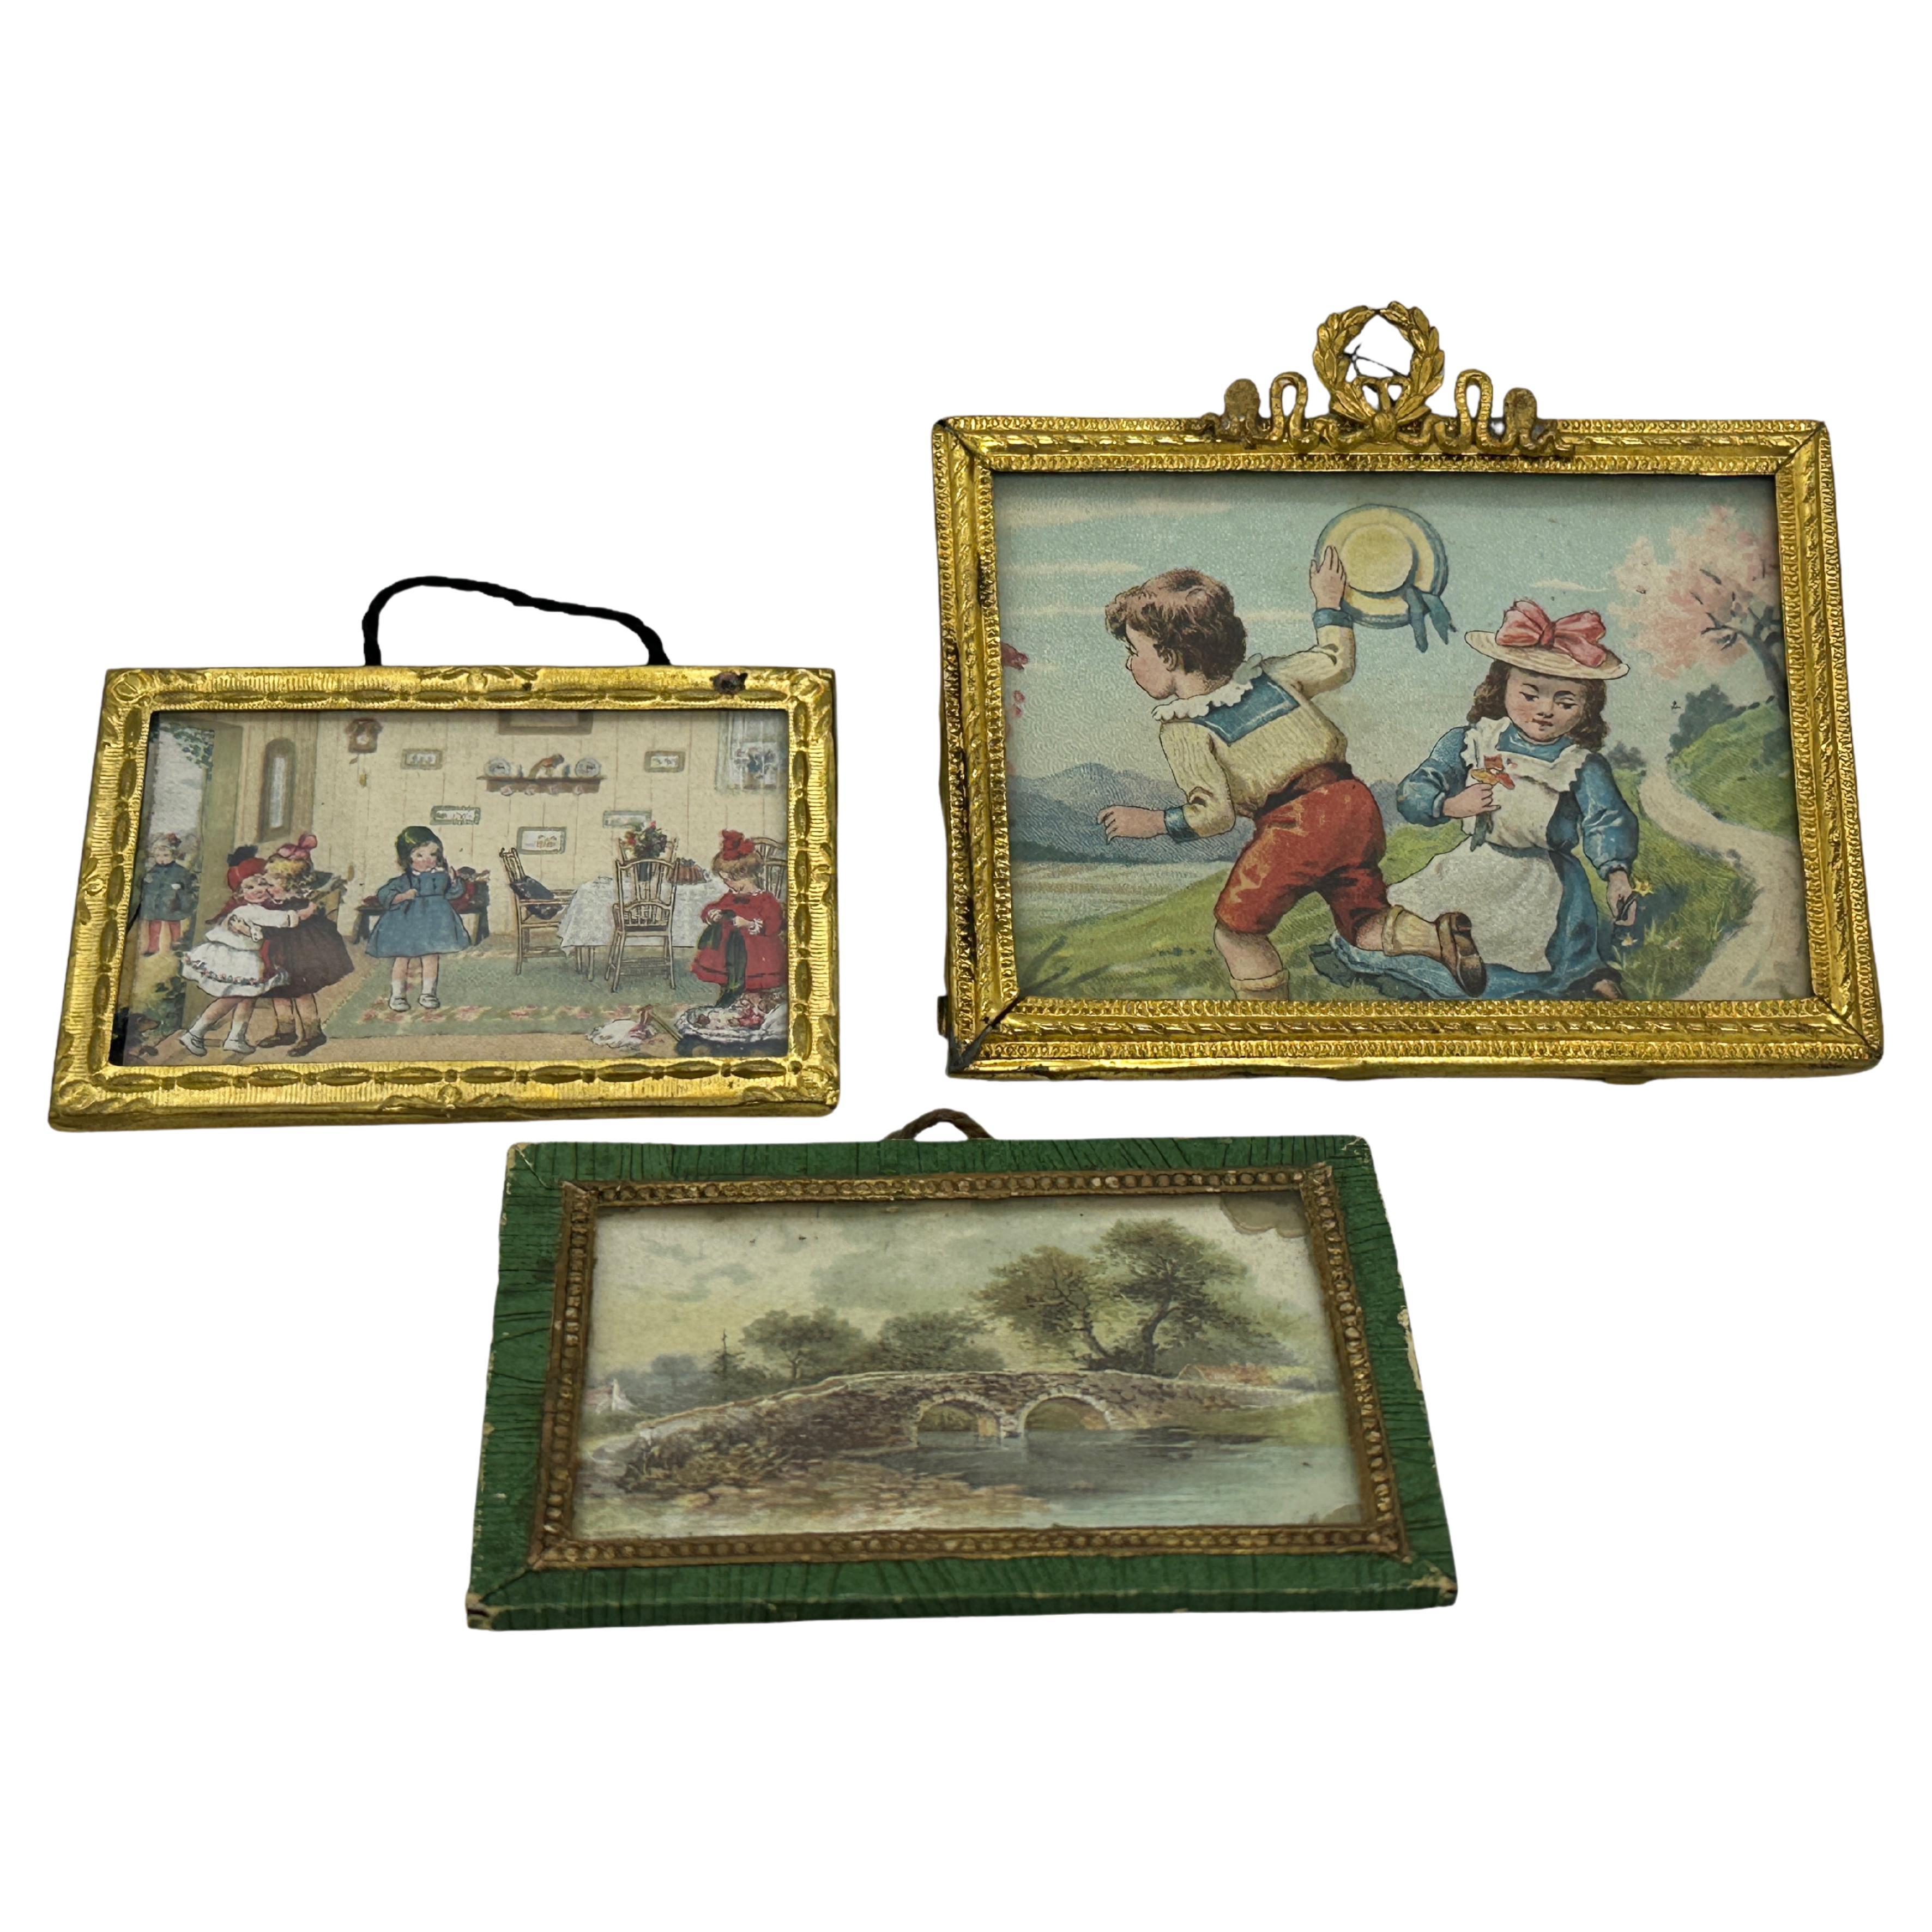 2 Miniature Picture Frames Erhard & Söhne Antique German Dollhouse Toy 1900s For Sale